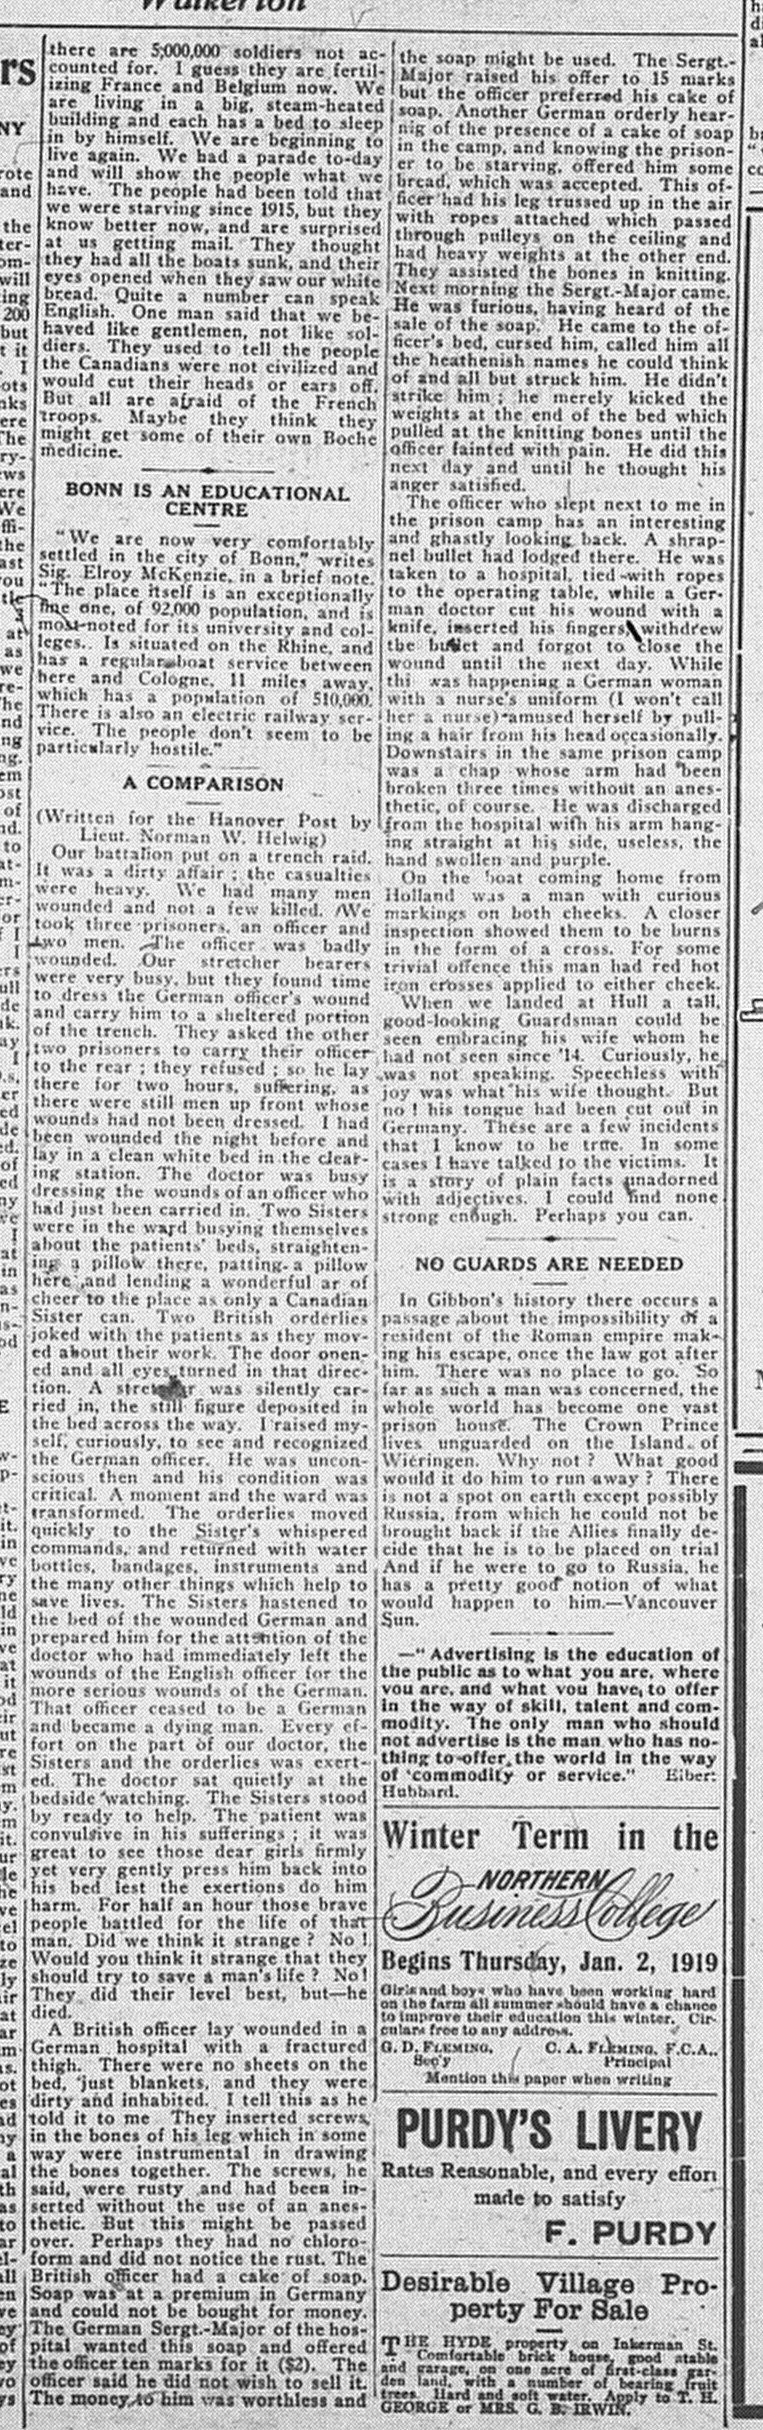 Paisley Advocate, January 15, 1919